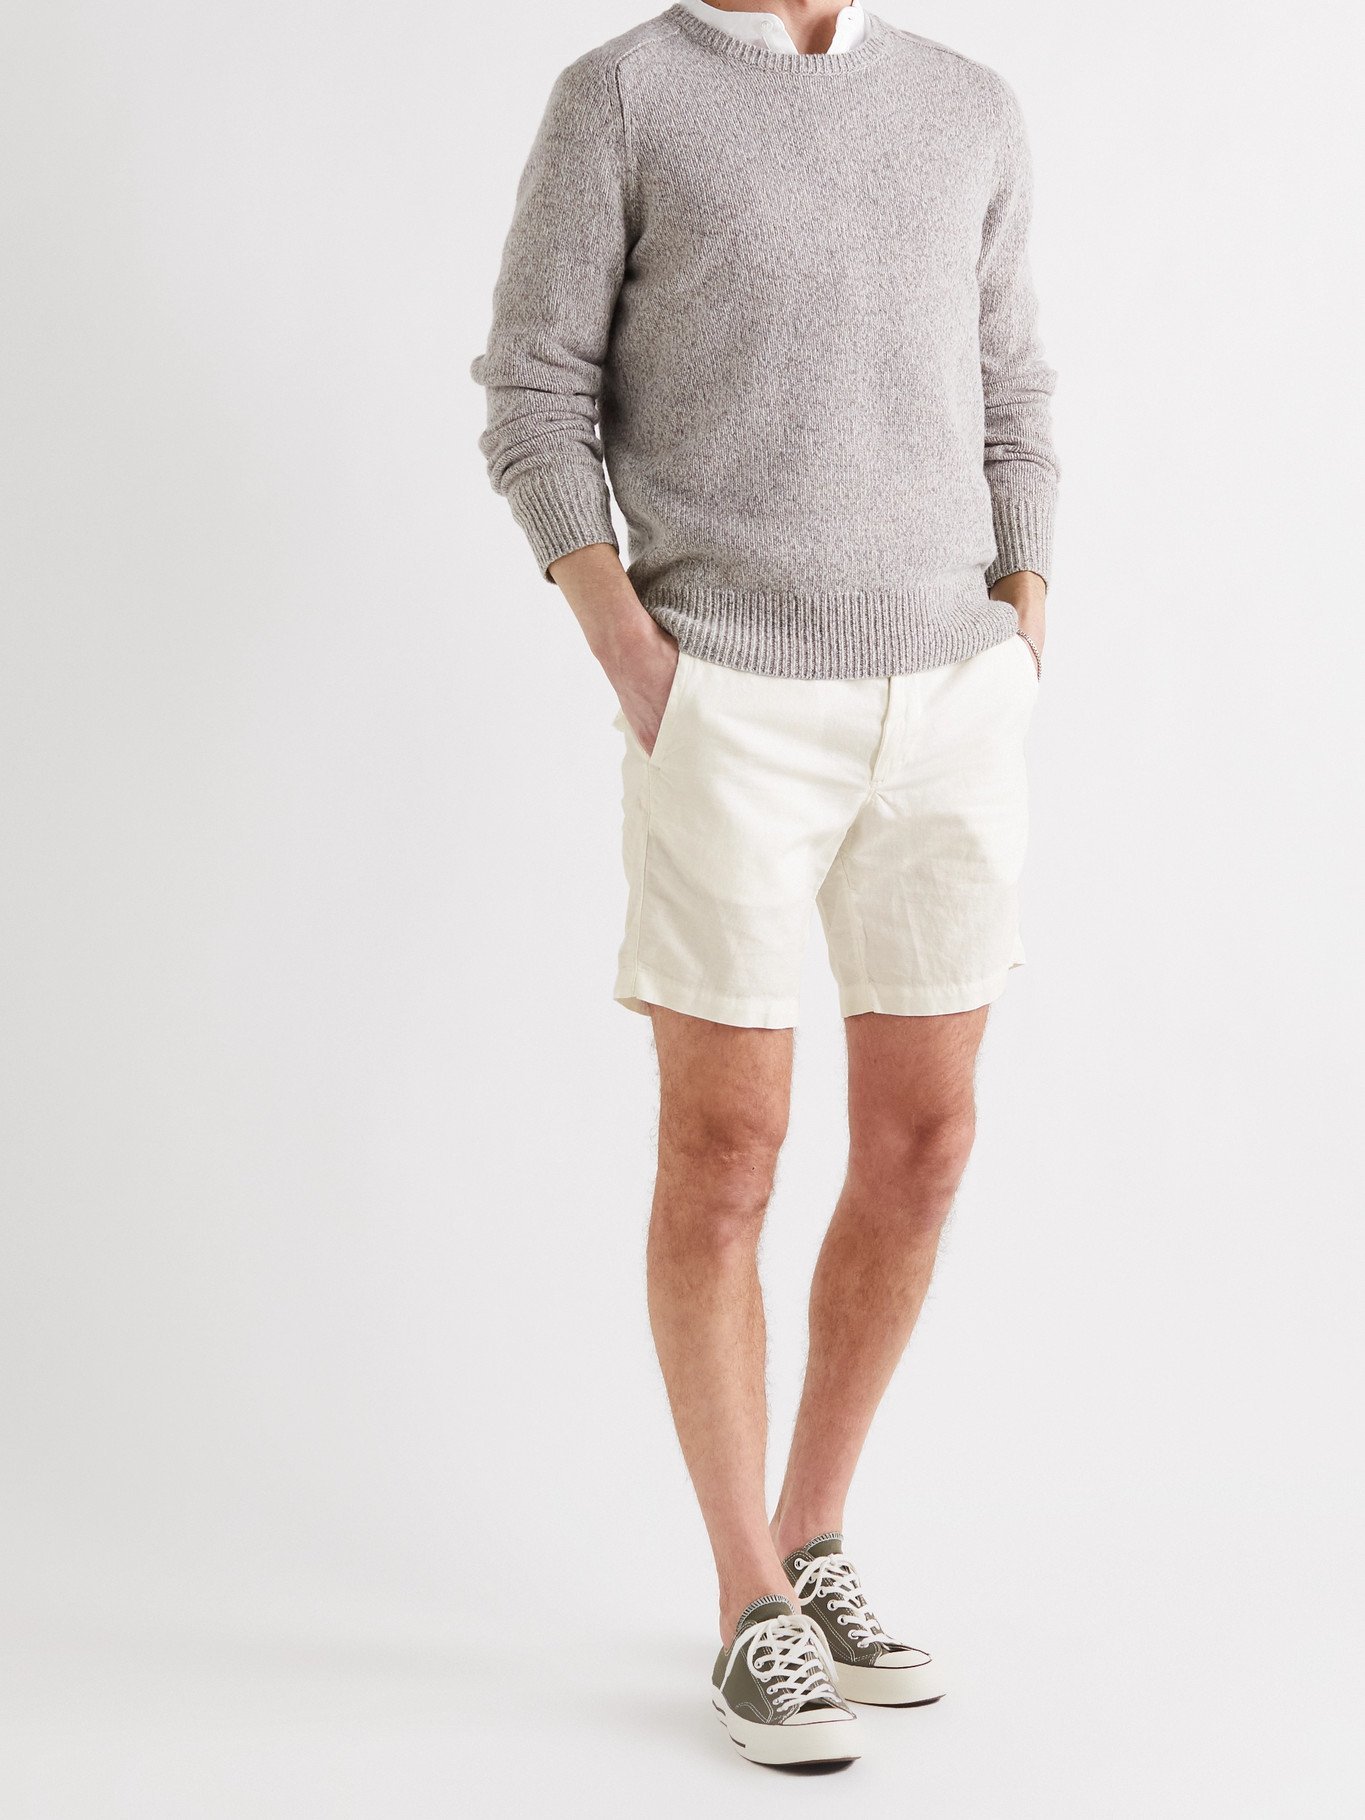 POLO RALPH LAUREN - Linen and Cotton-Blend Shorts - White - UK/US 34 Polo Ralph  Lauren